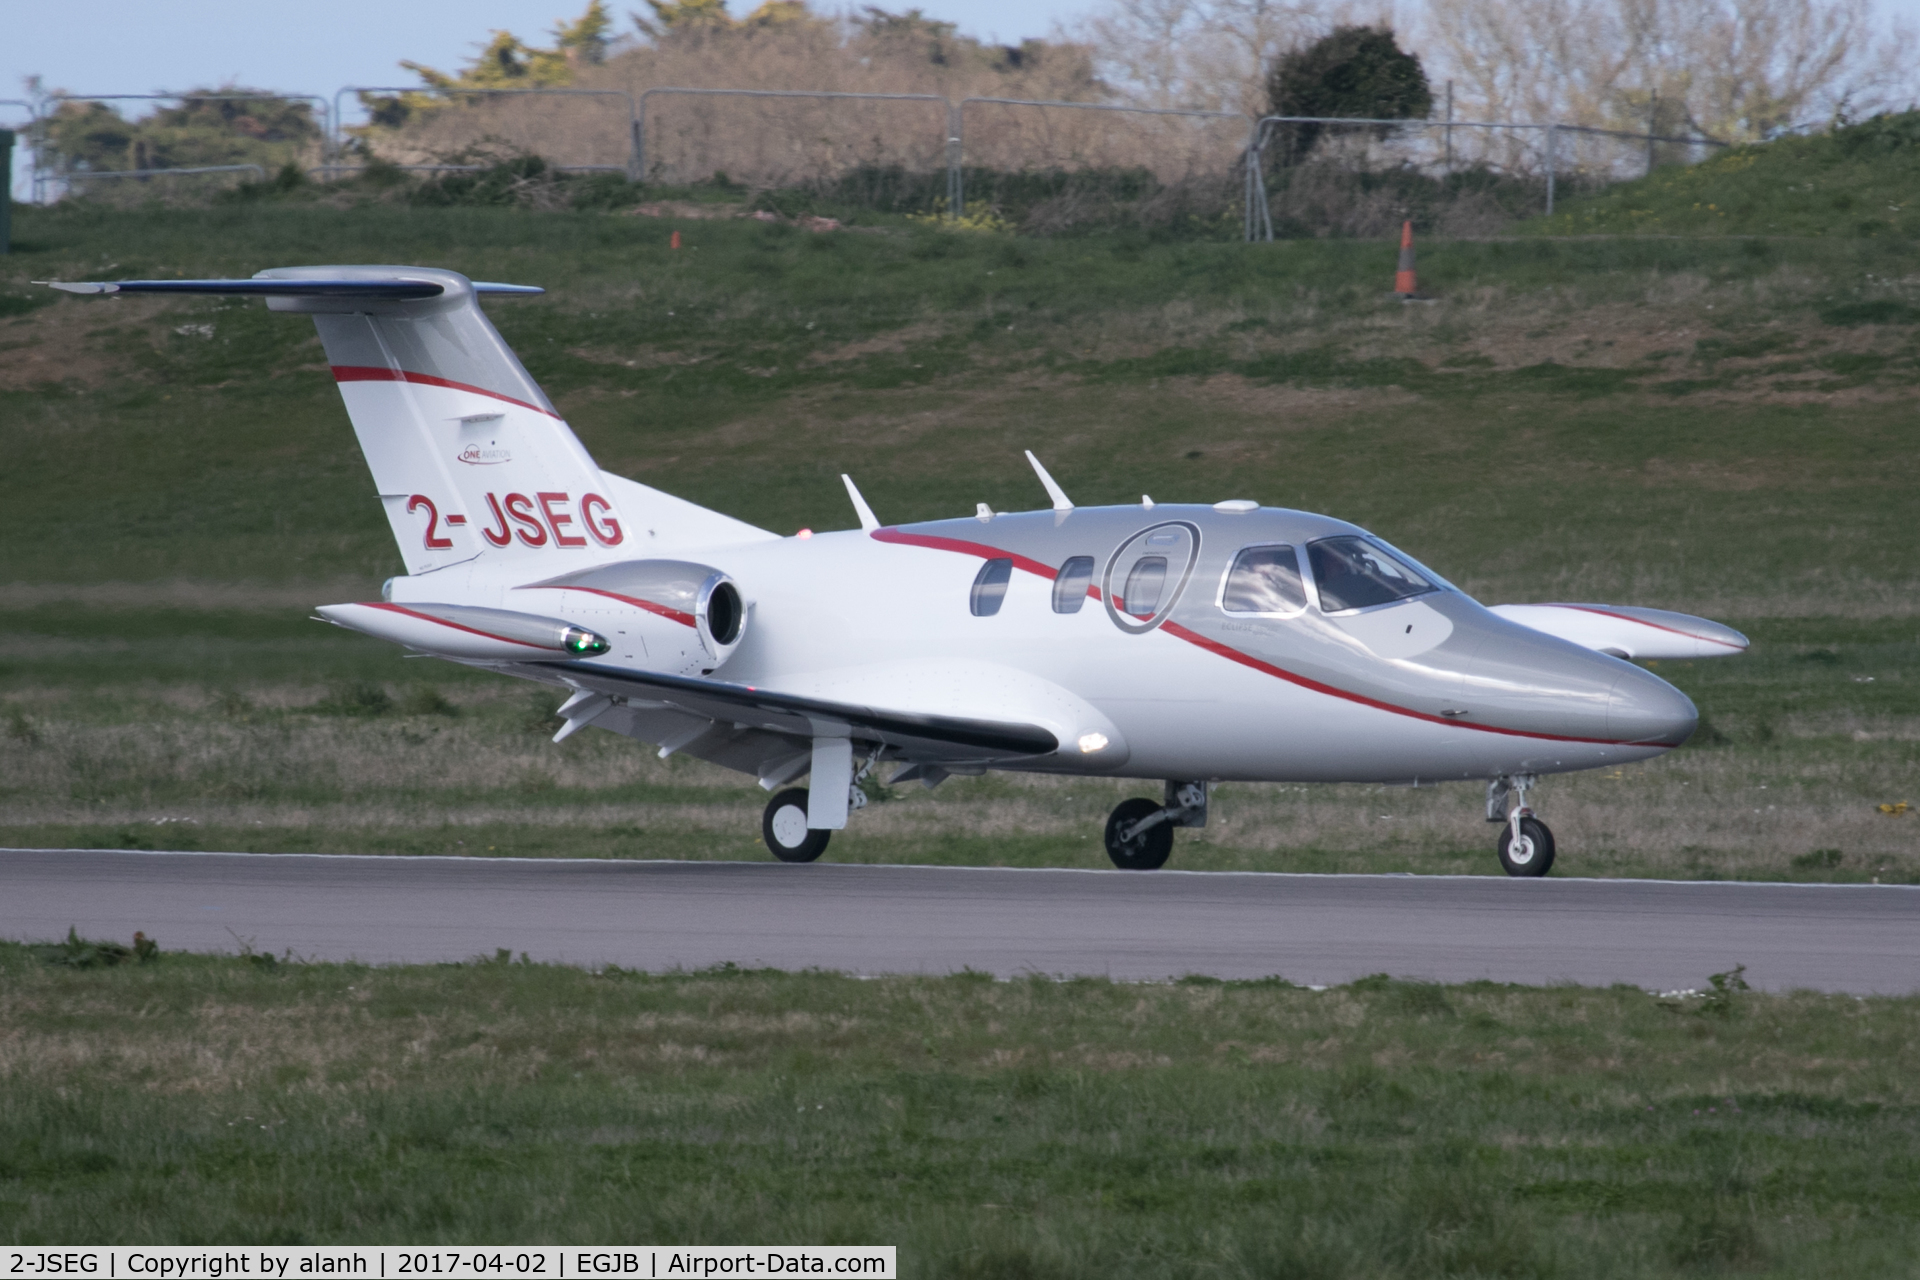 2-JSEG, 2008 Eclipse Aviation Corp EA500 C/N 000144, Arriving at Guernsey